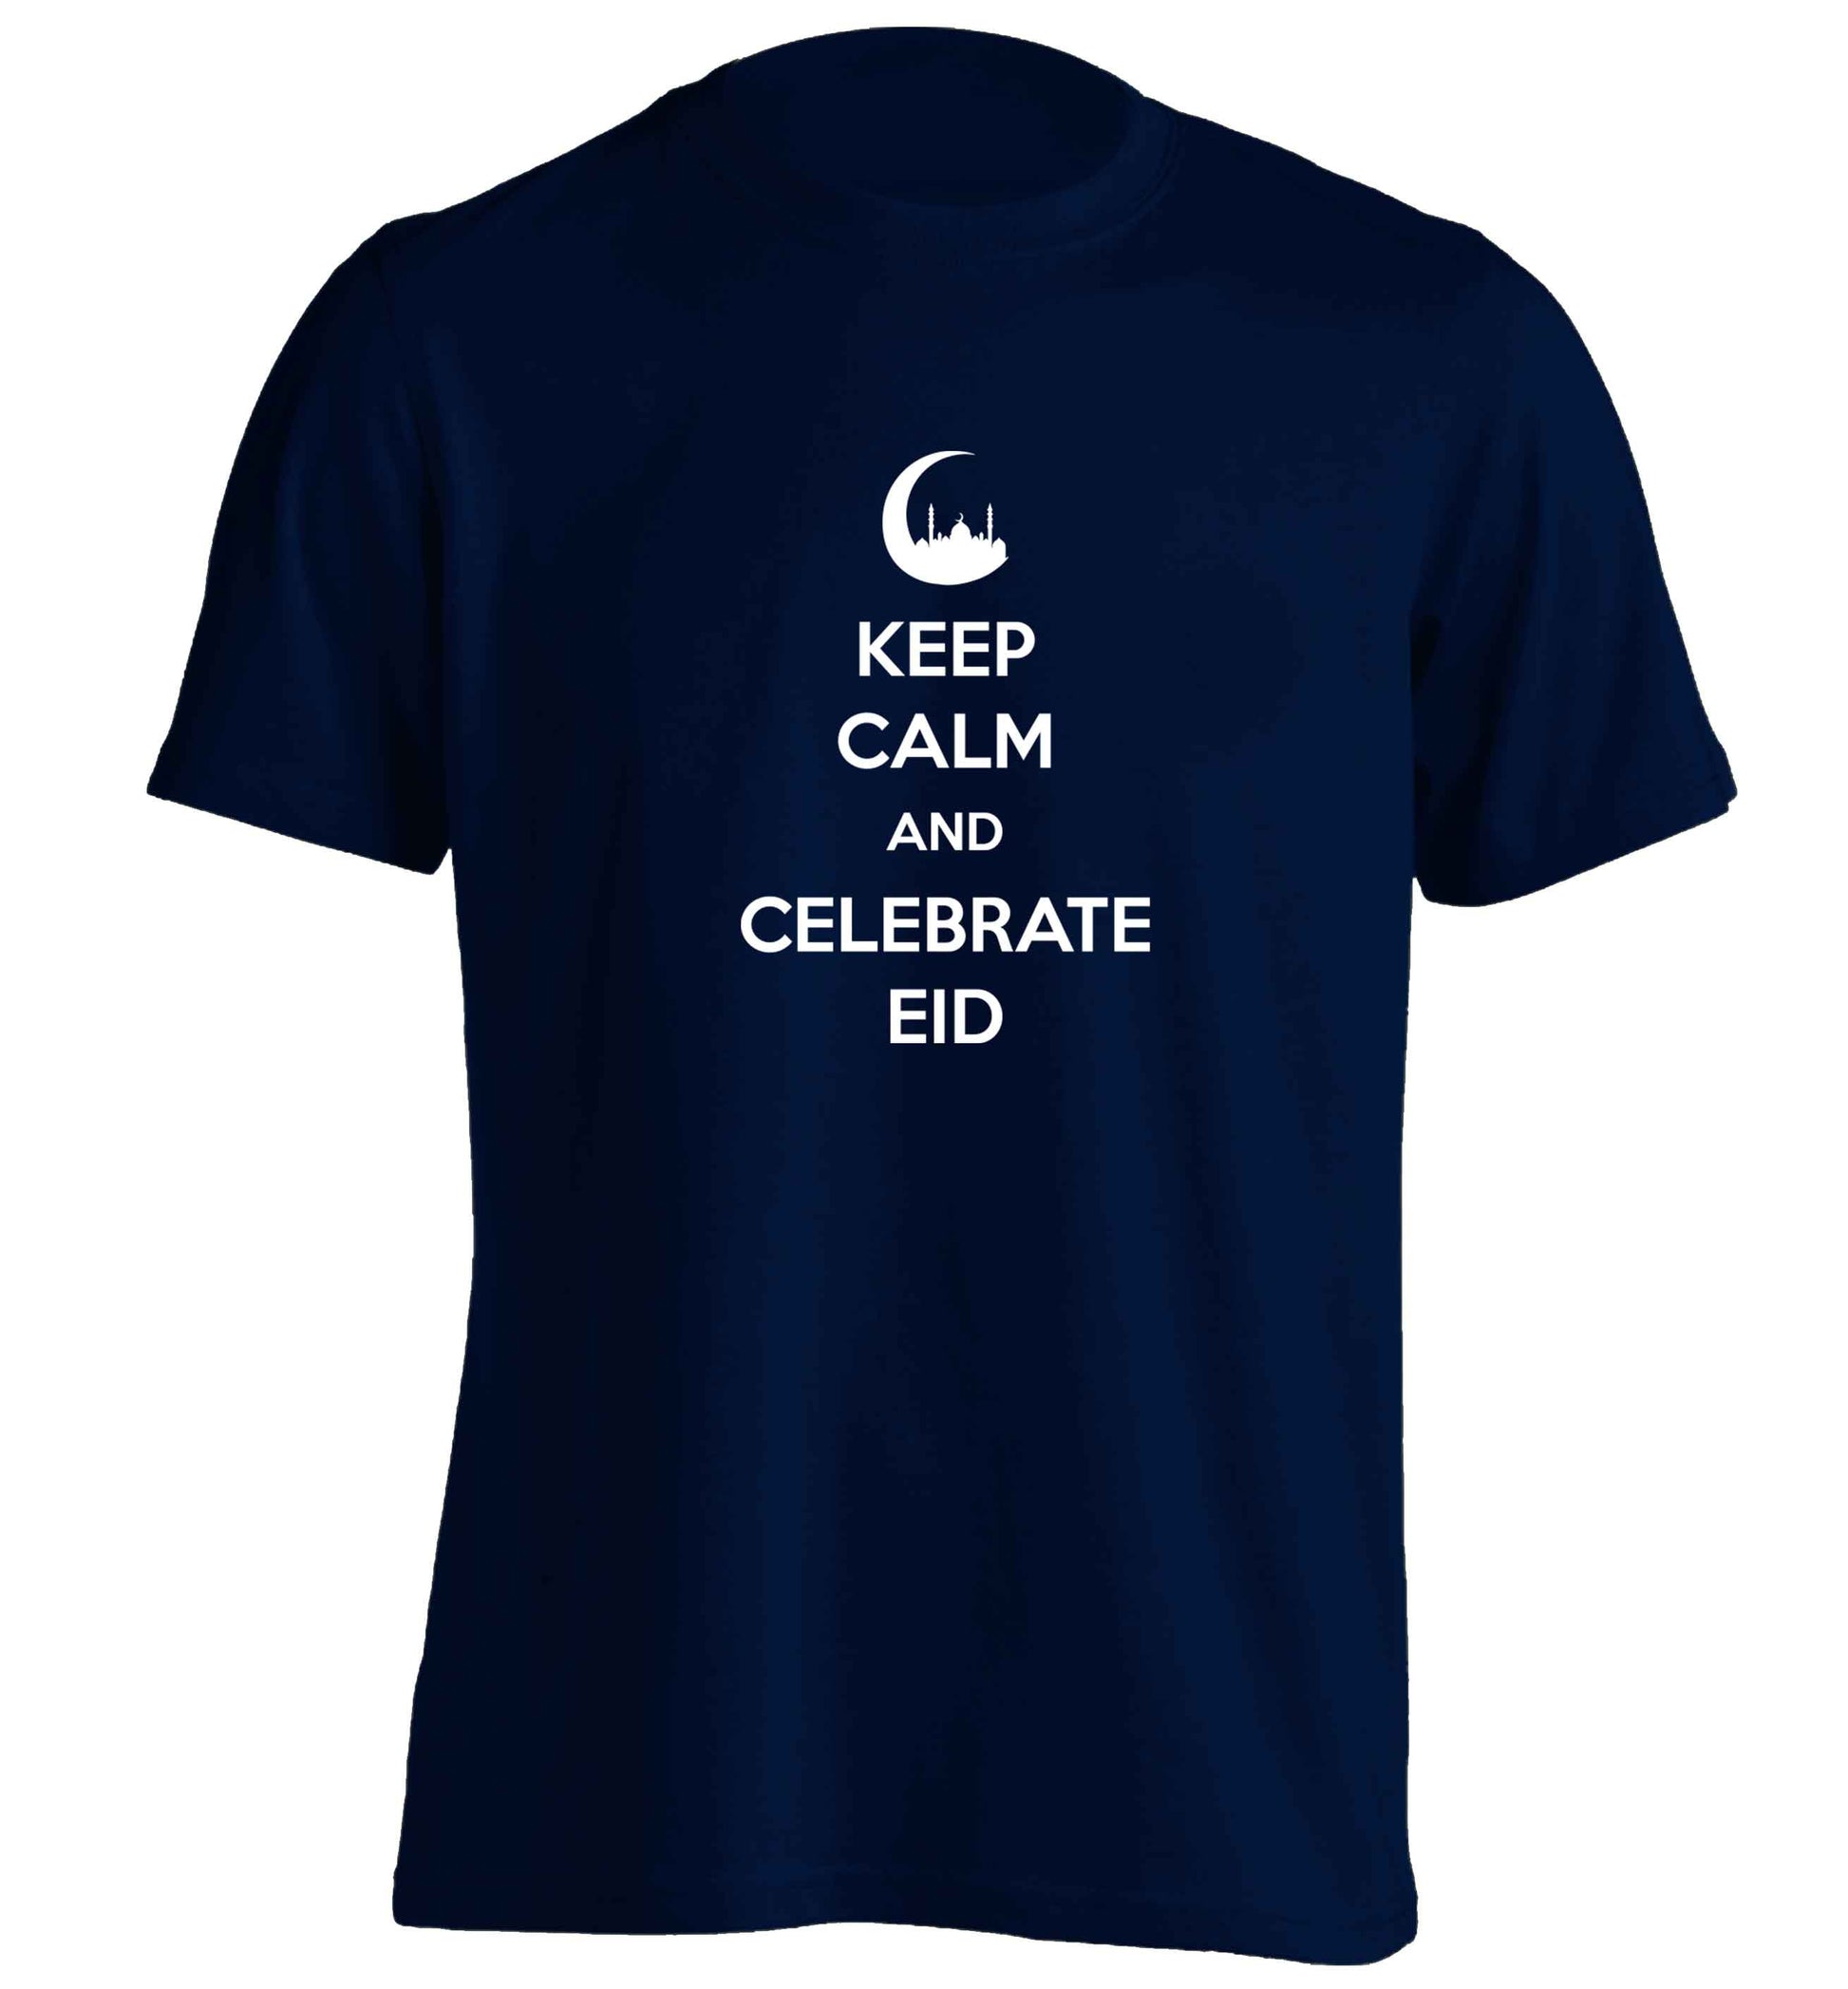 Keep calm and celebrate Eid adults unisex navy Tshirt 2XL